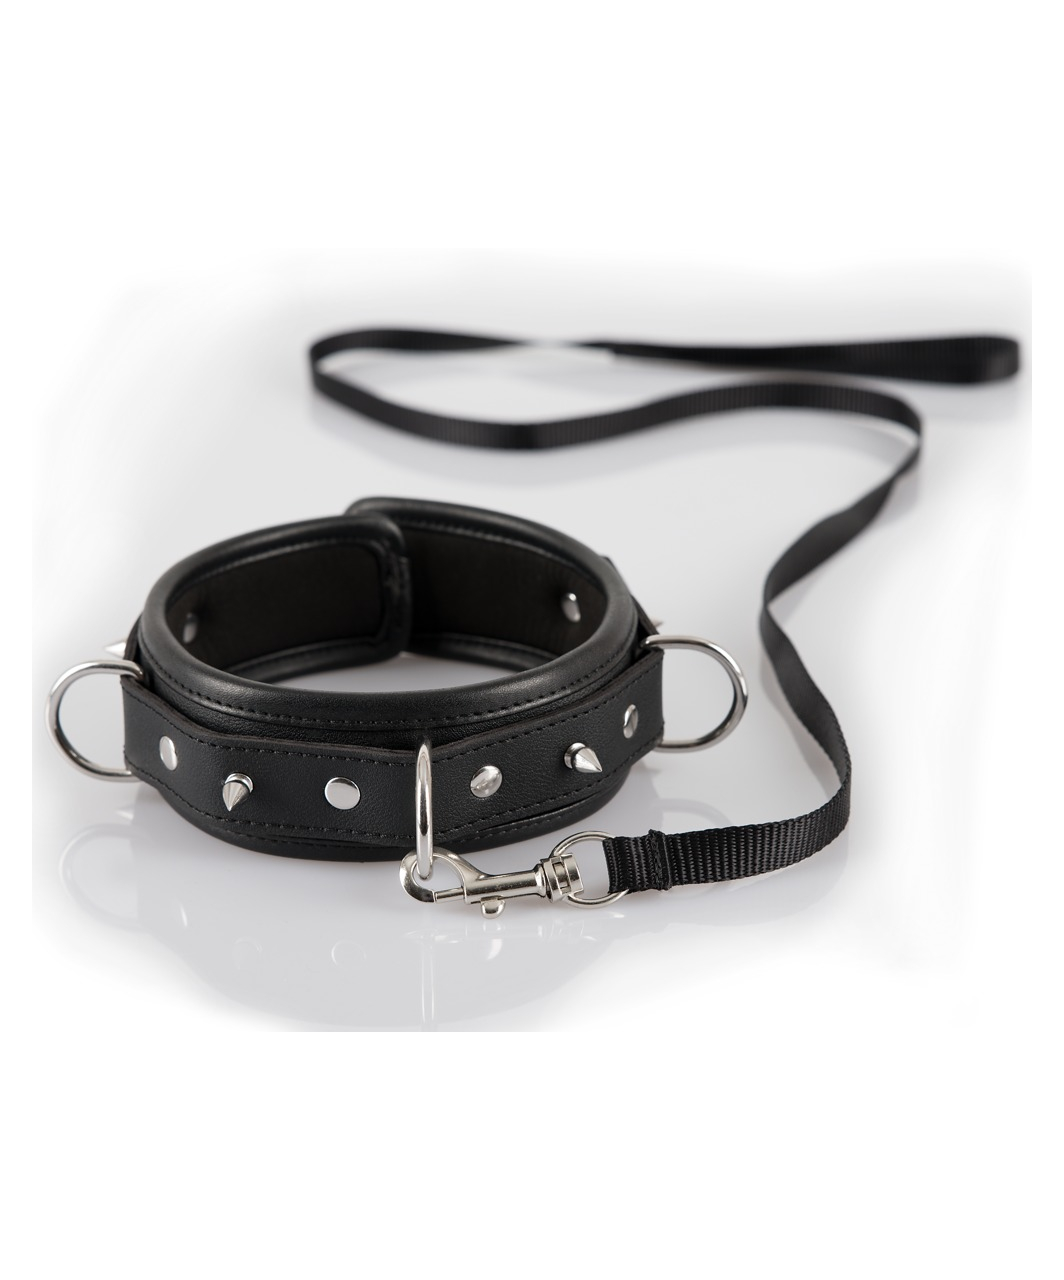 Bad Kitty studded collar with leash